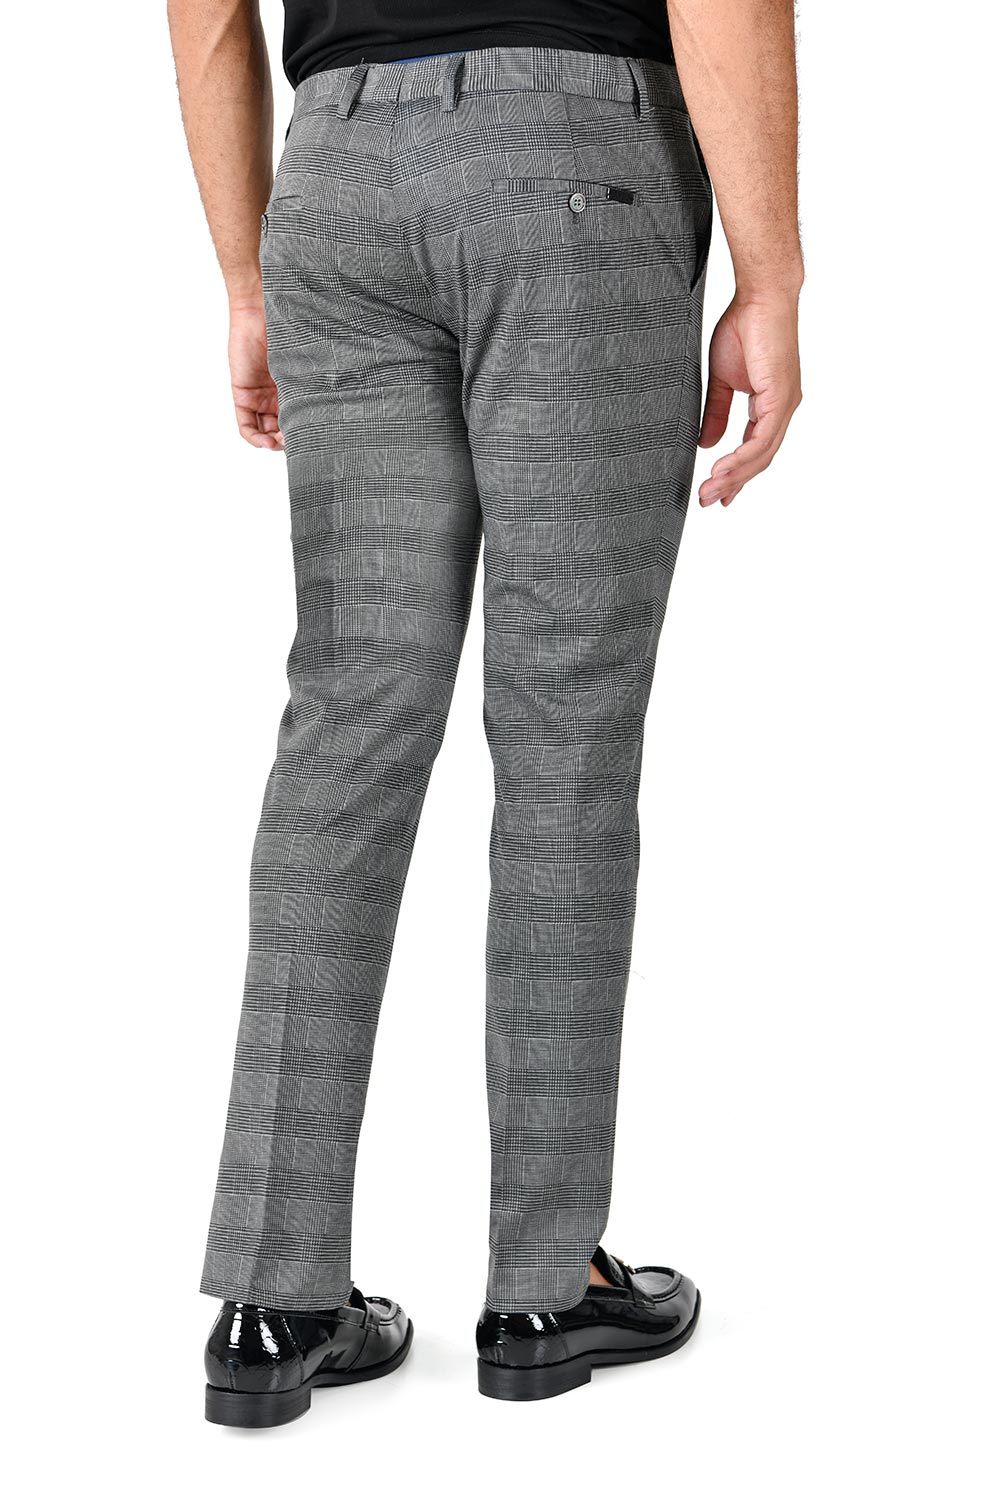 BARABAS men's checkered plaid light grey chino pants CP131